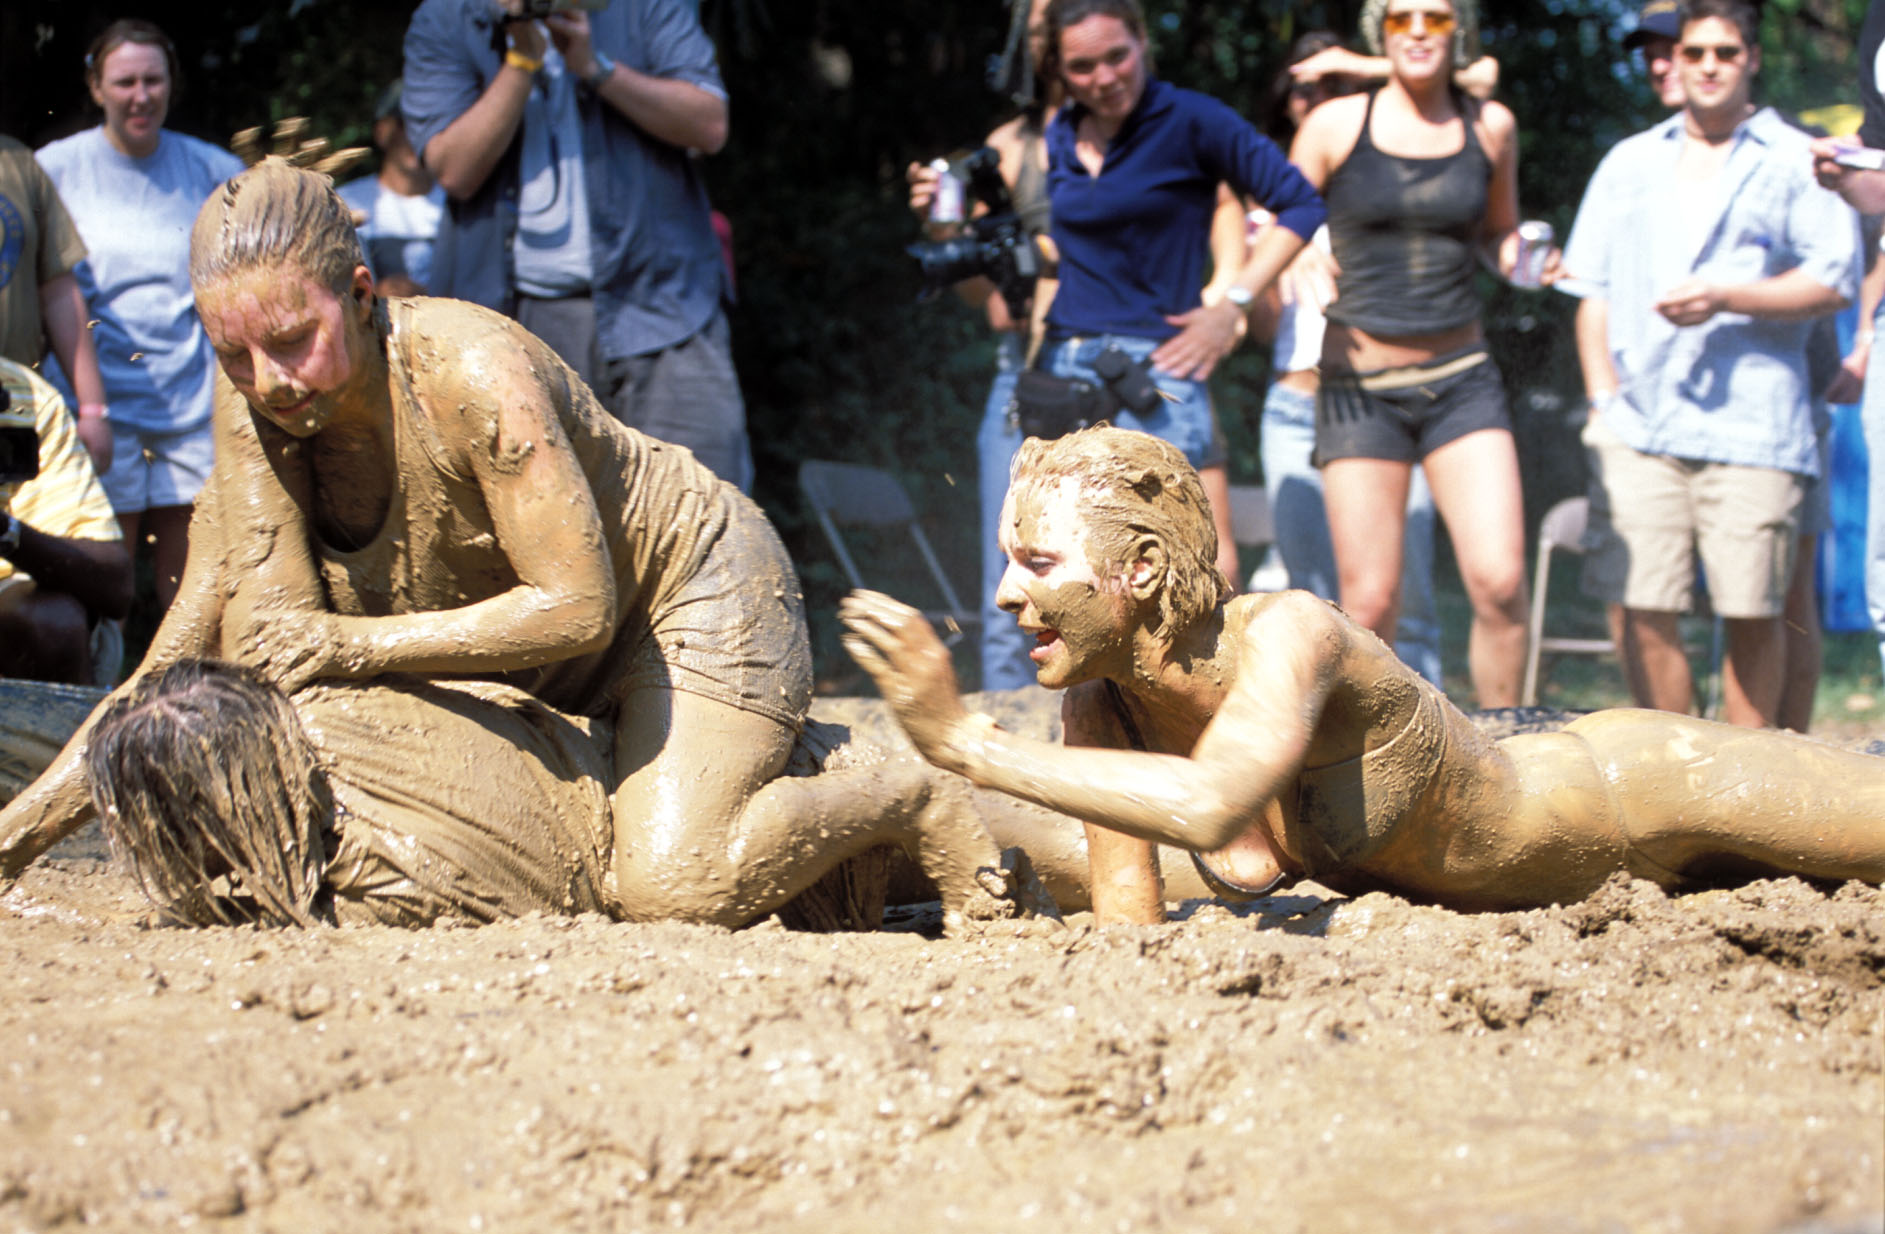 Female mud wrestlers